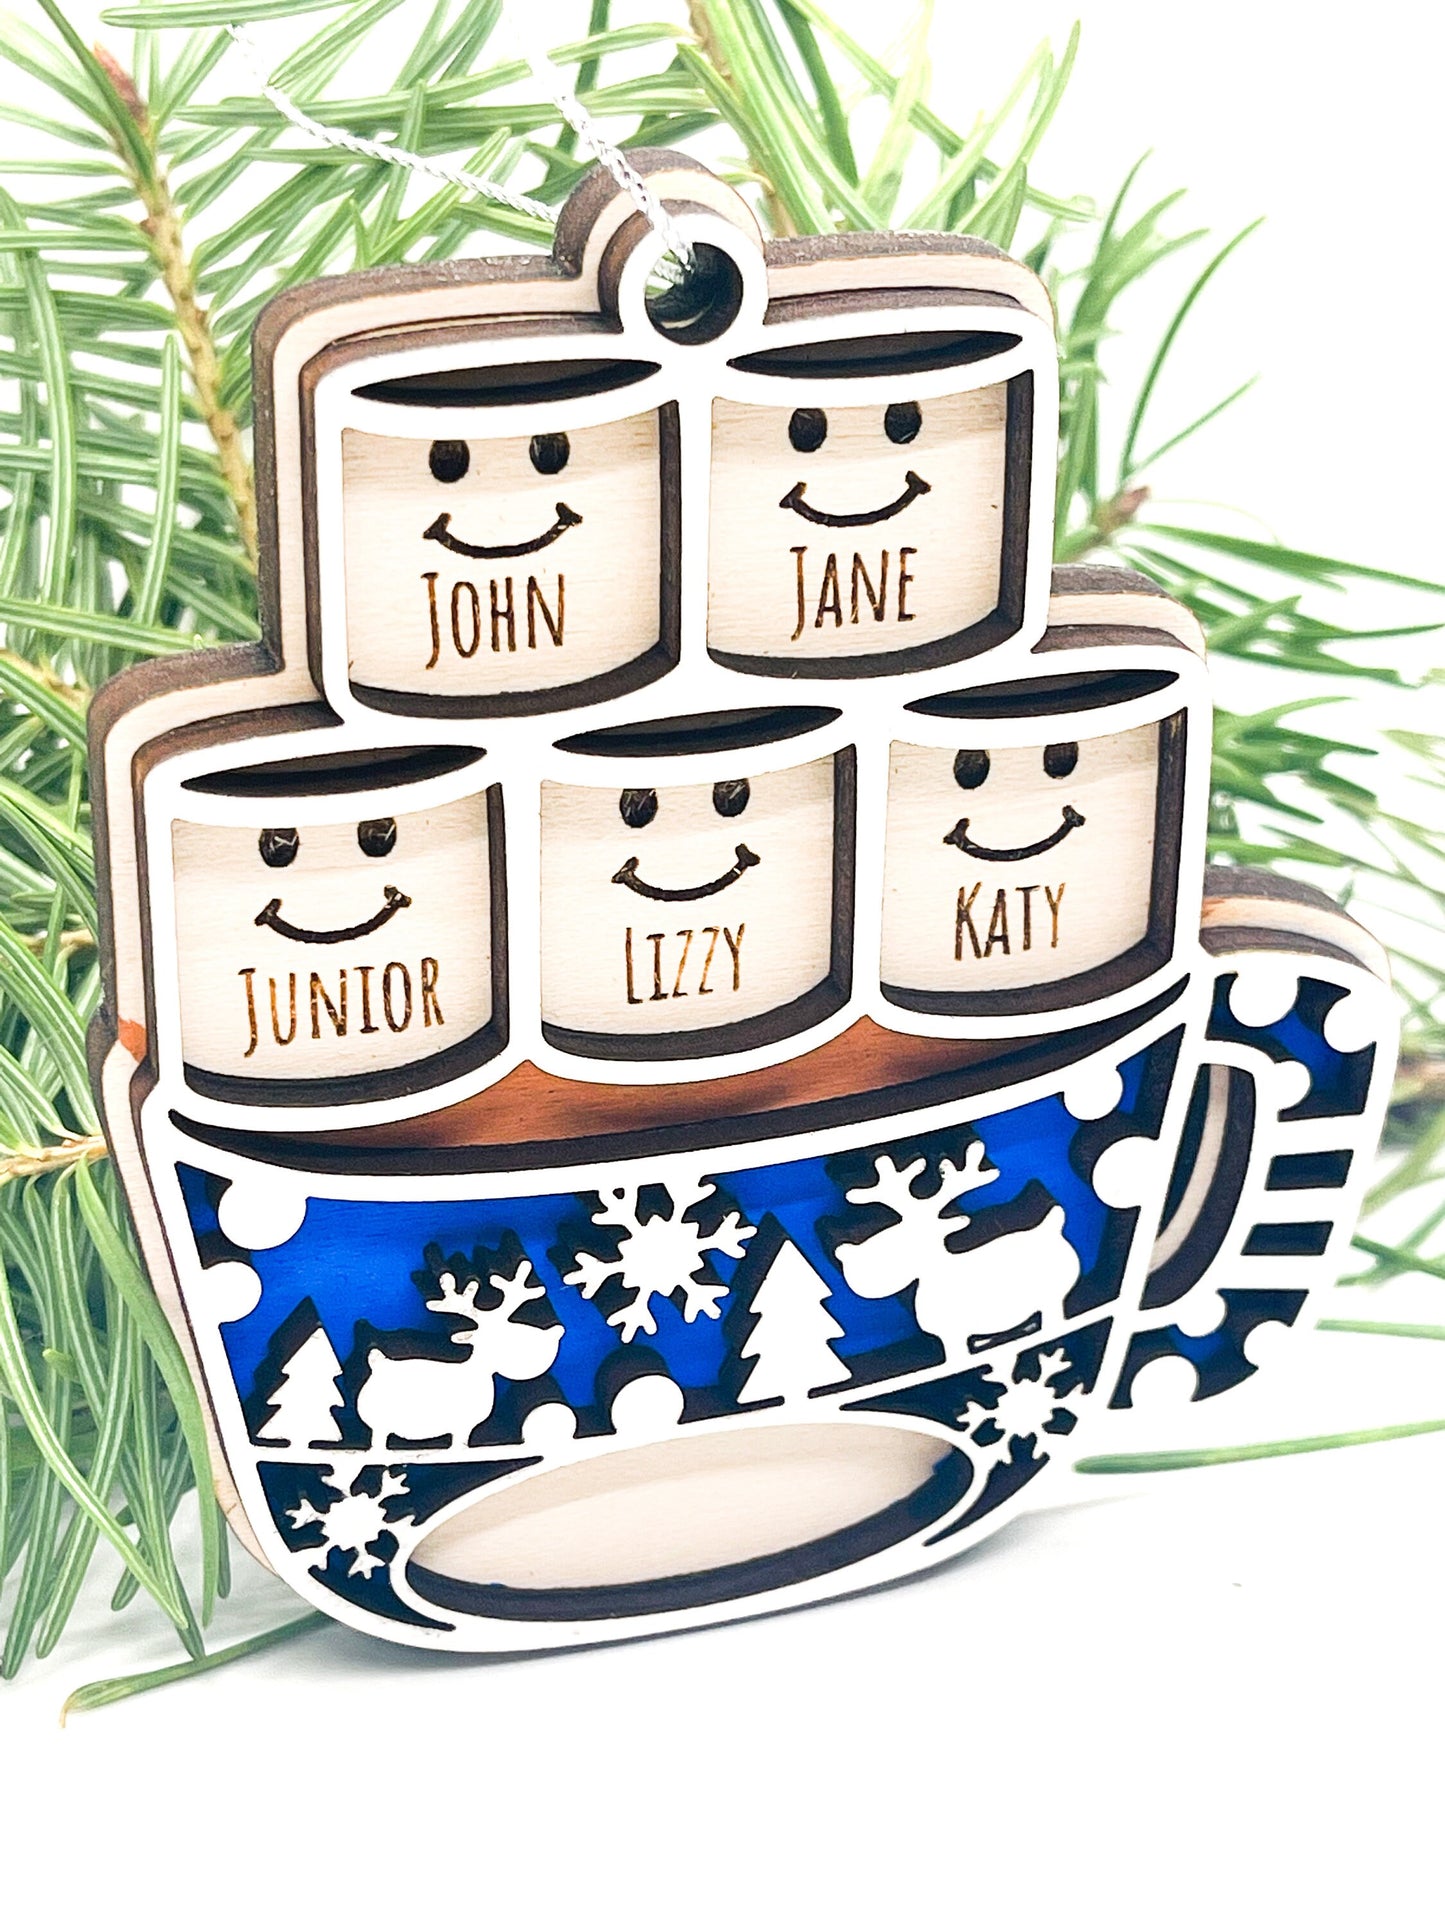 Marshmallow Peeps Ornament | Hot Cocoa Ornament | Personalized Family Ornament